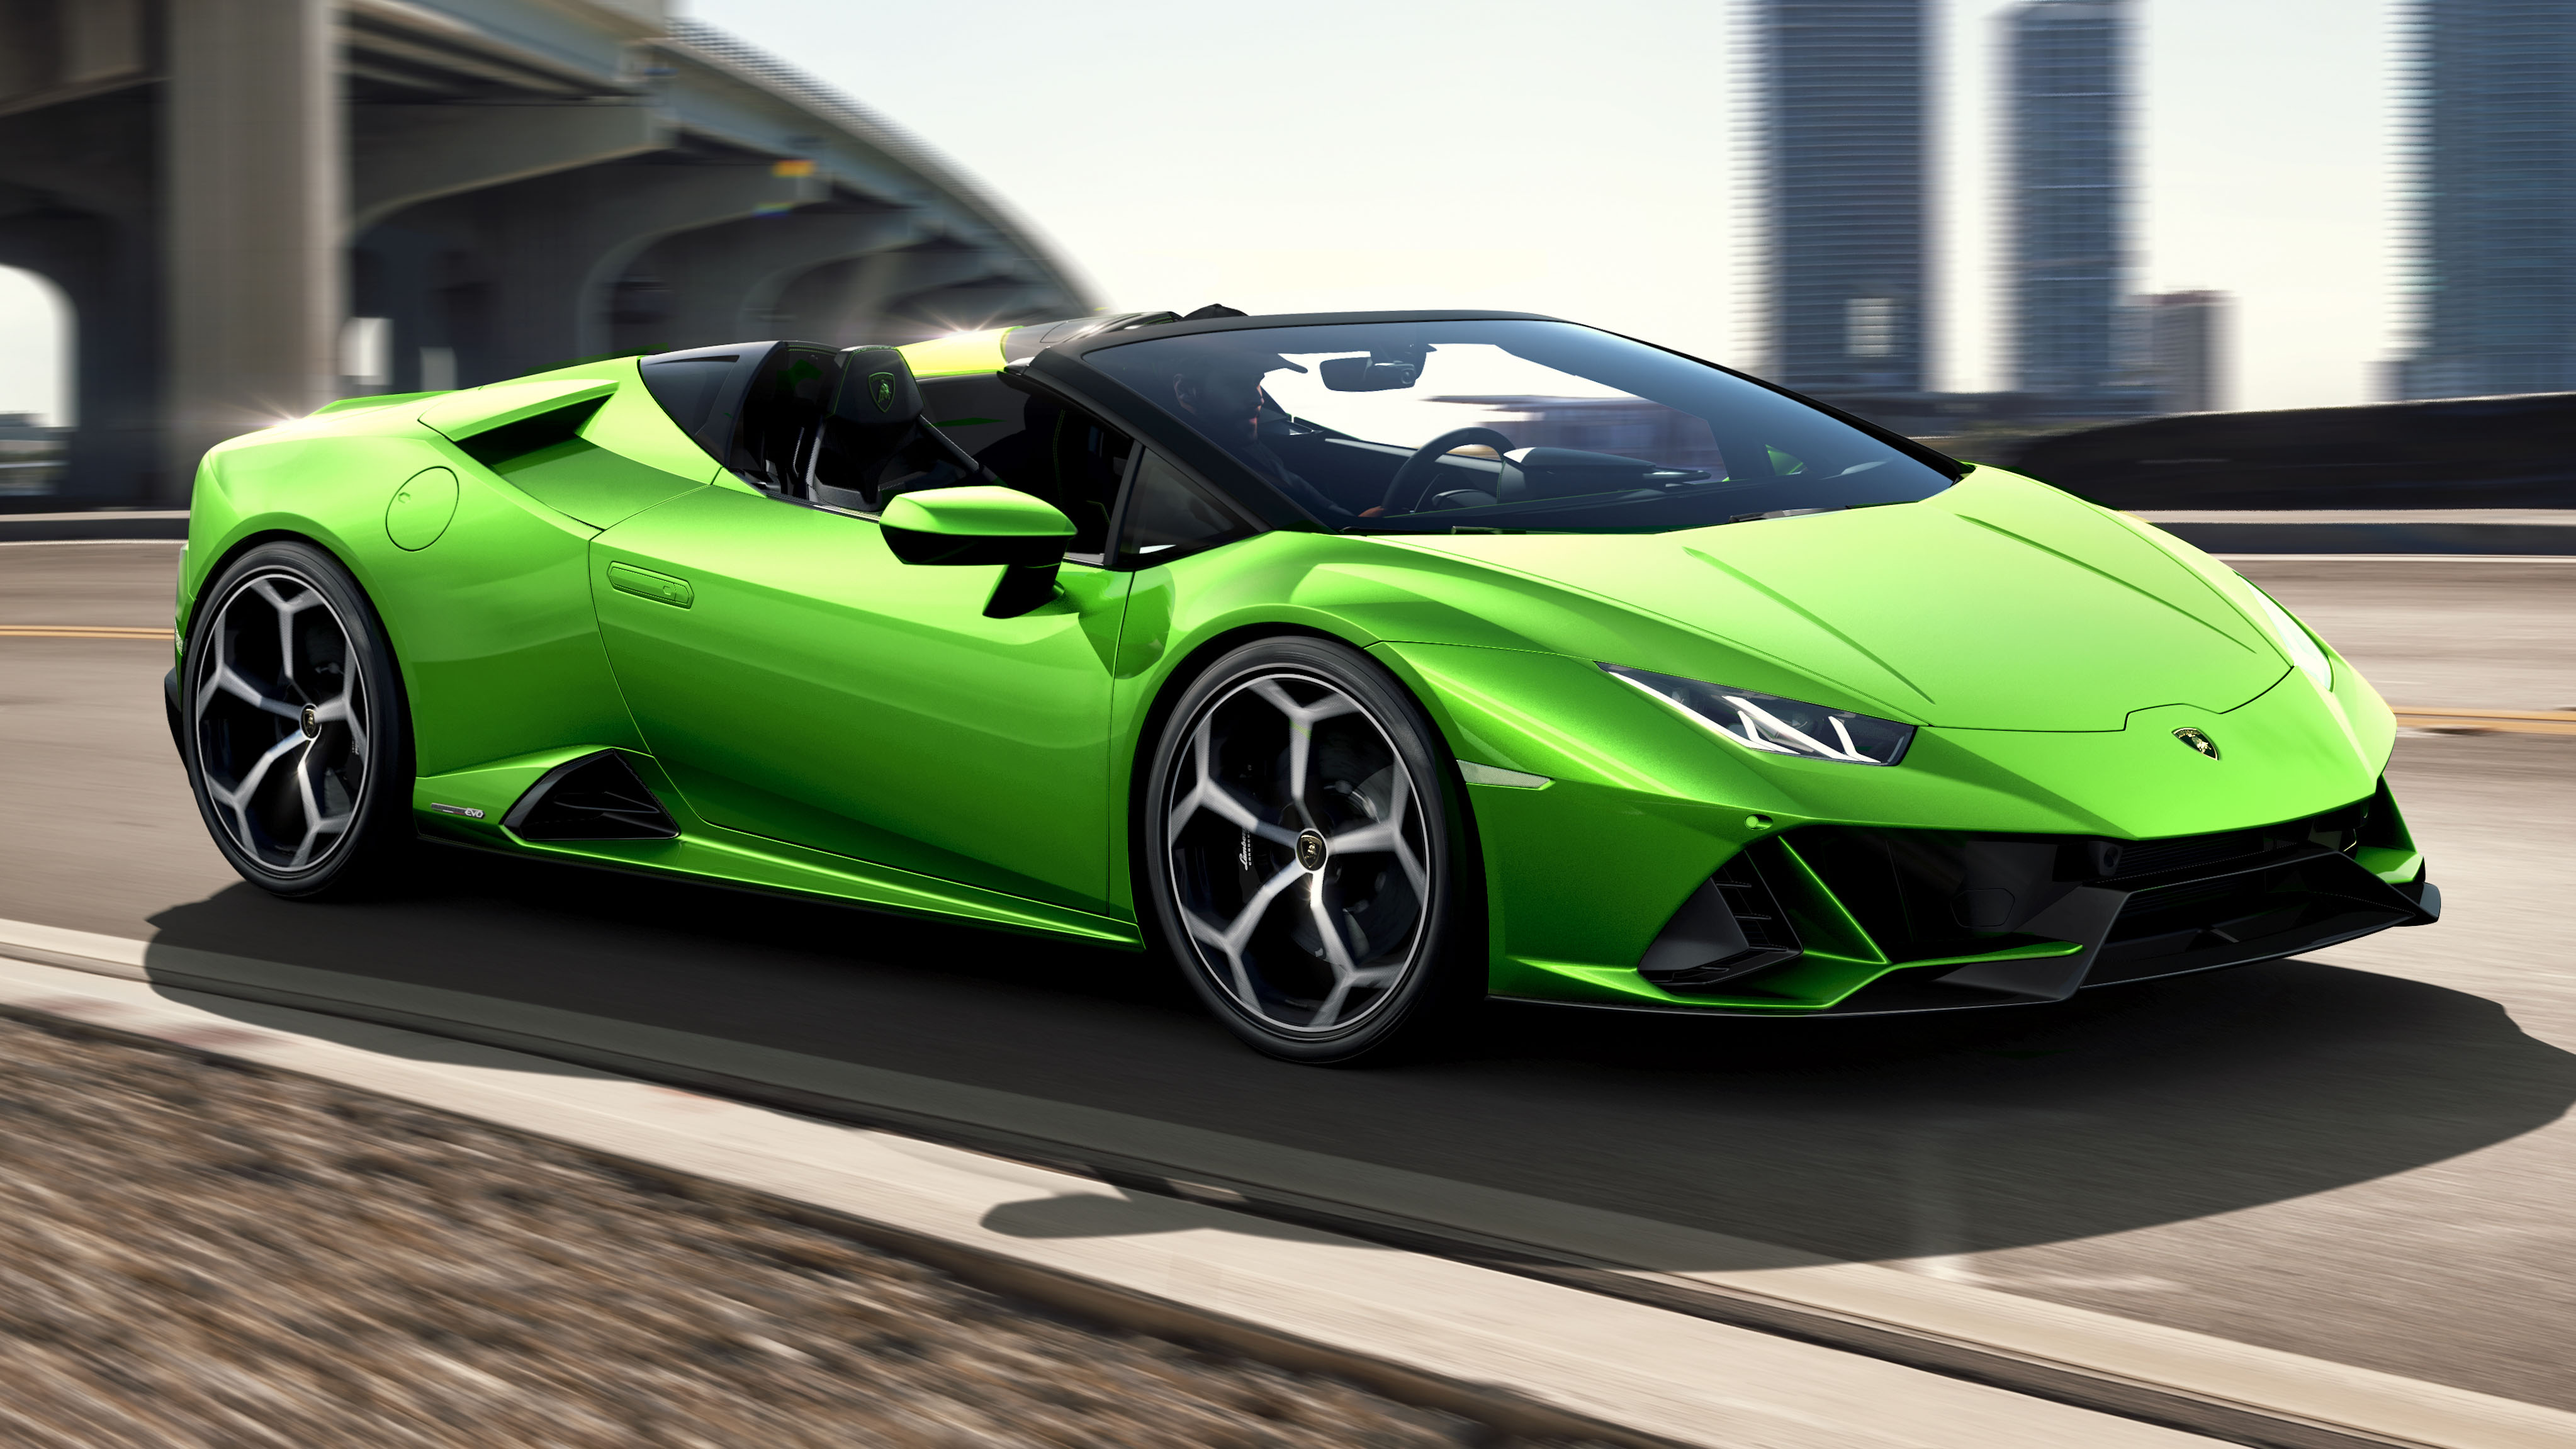 2020 Lamborghini Huracan Evo Spyder revealed - Automotive ...